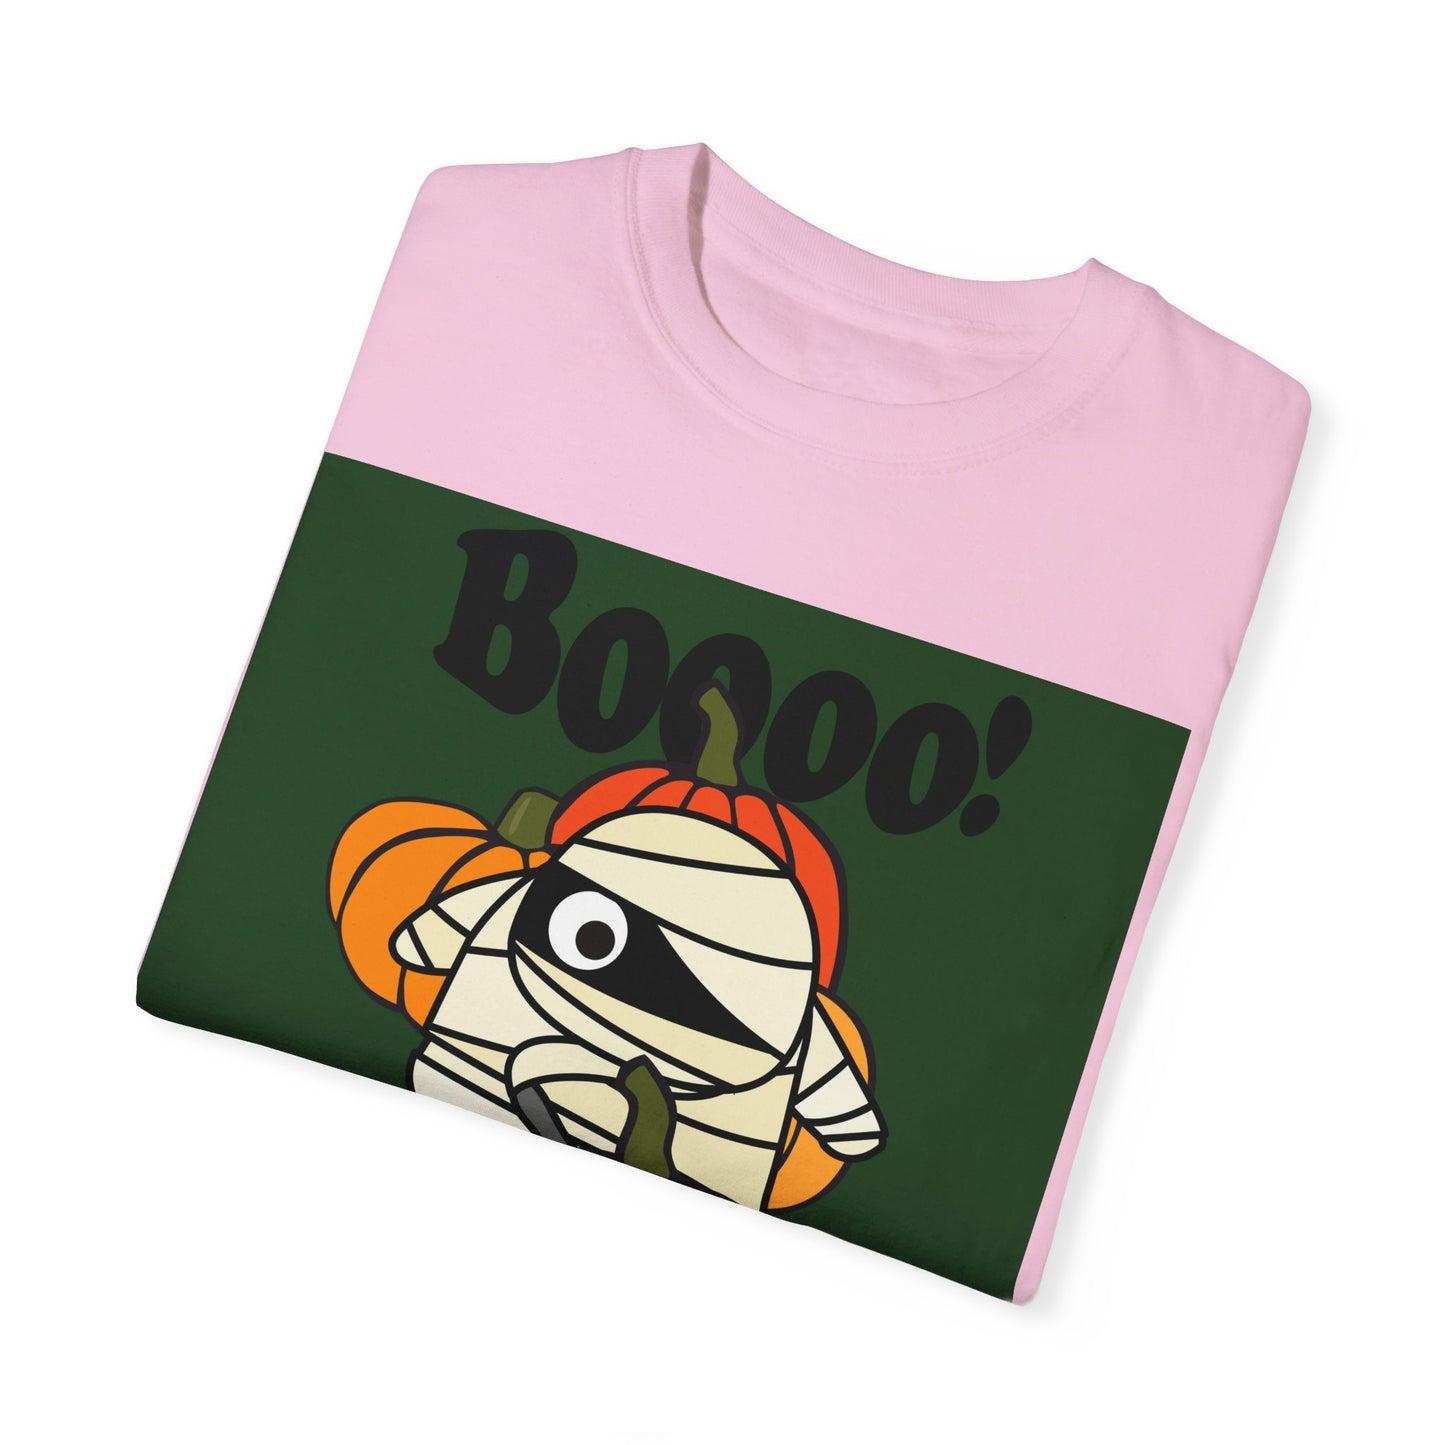 Boo Ghoul And Pumpkin Halloween Tee | Western Halloween T-Shirt Unisex Funny Ghost Graphic Print Shirt Tee Top